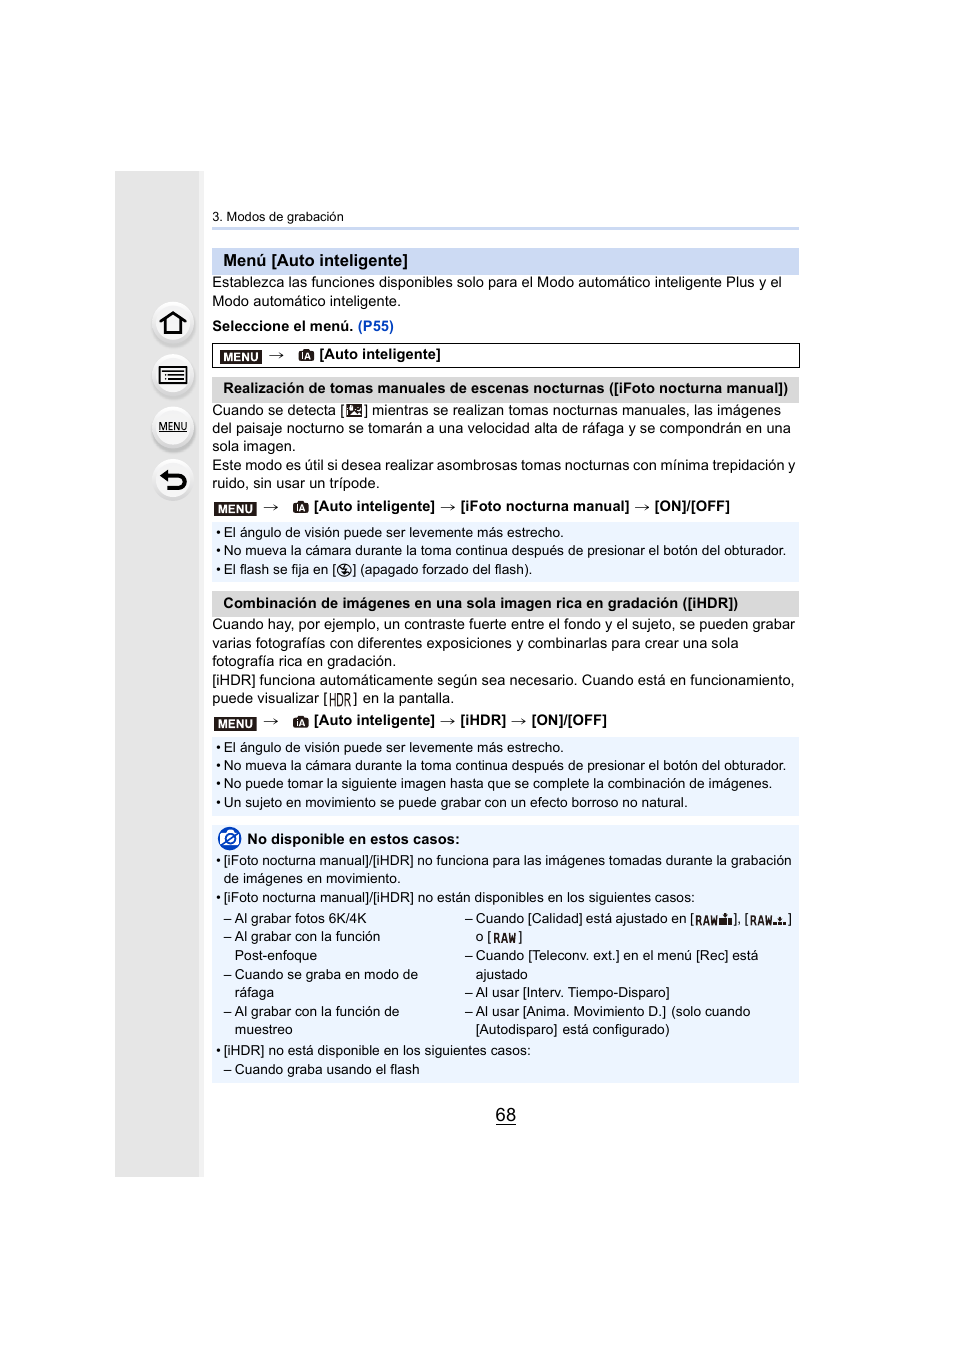 Menú [auto inteligente, P68) | Panasonic Lumix GH5 Manual del usuario | Página 68 / 347